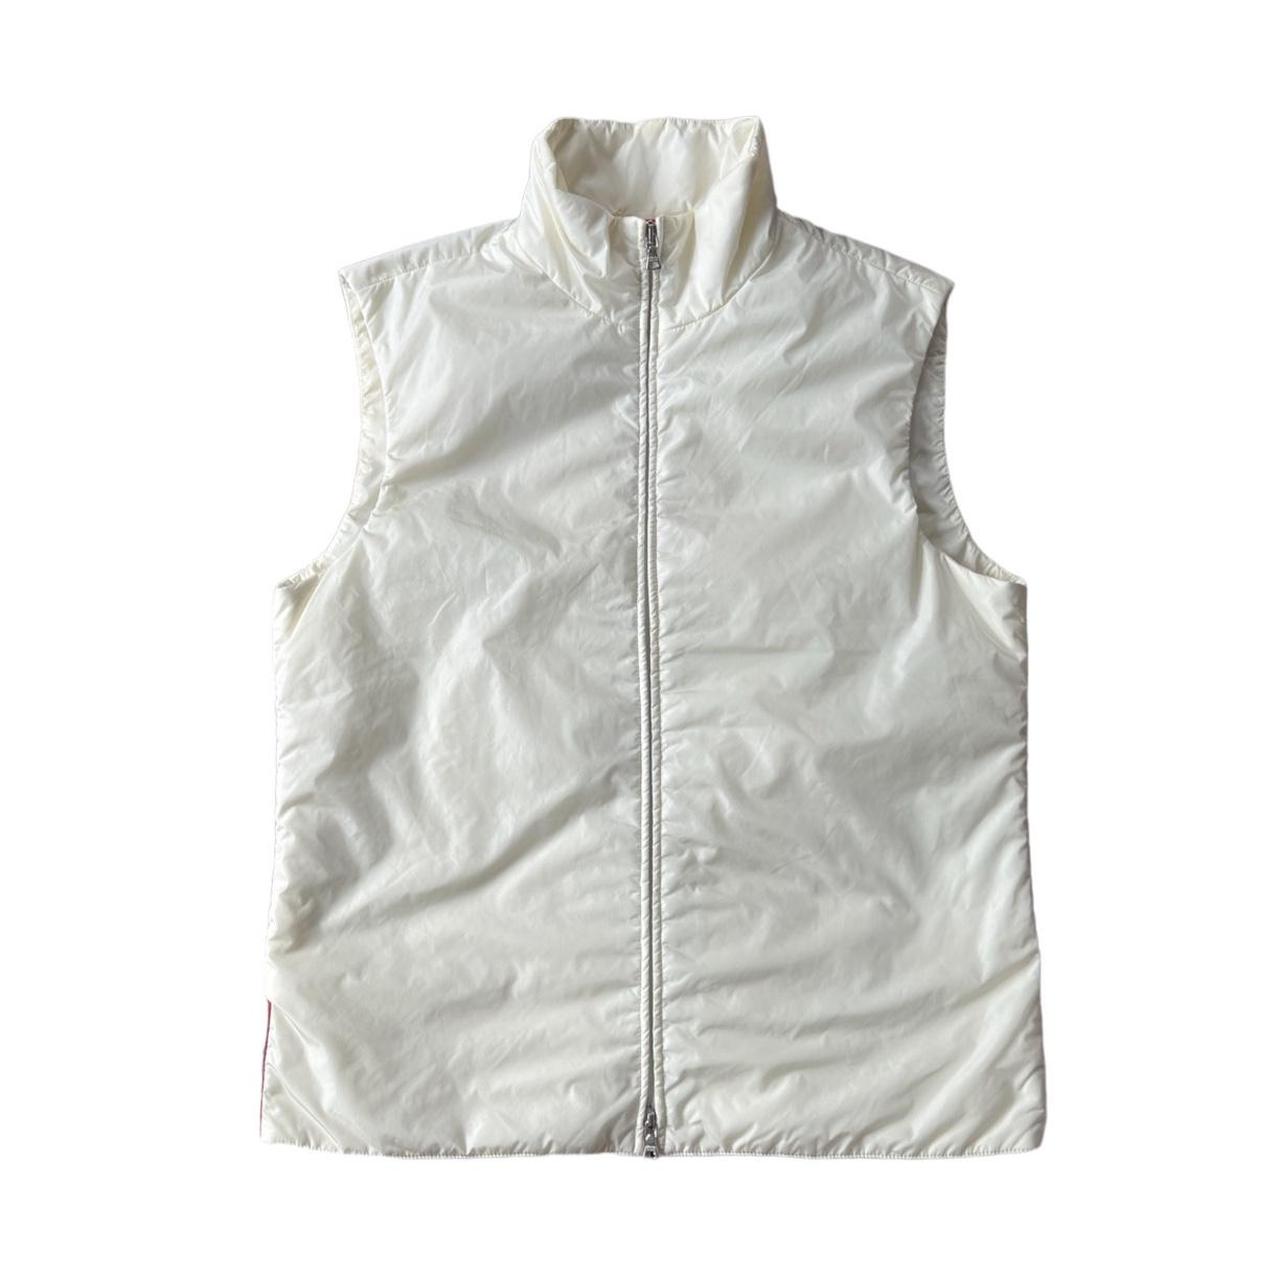 Iconic Prada Sport SS99 White Down Vest